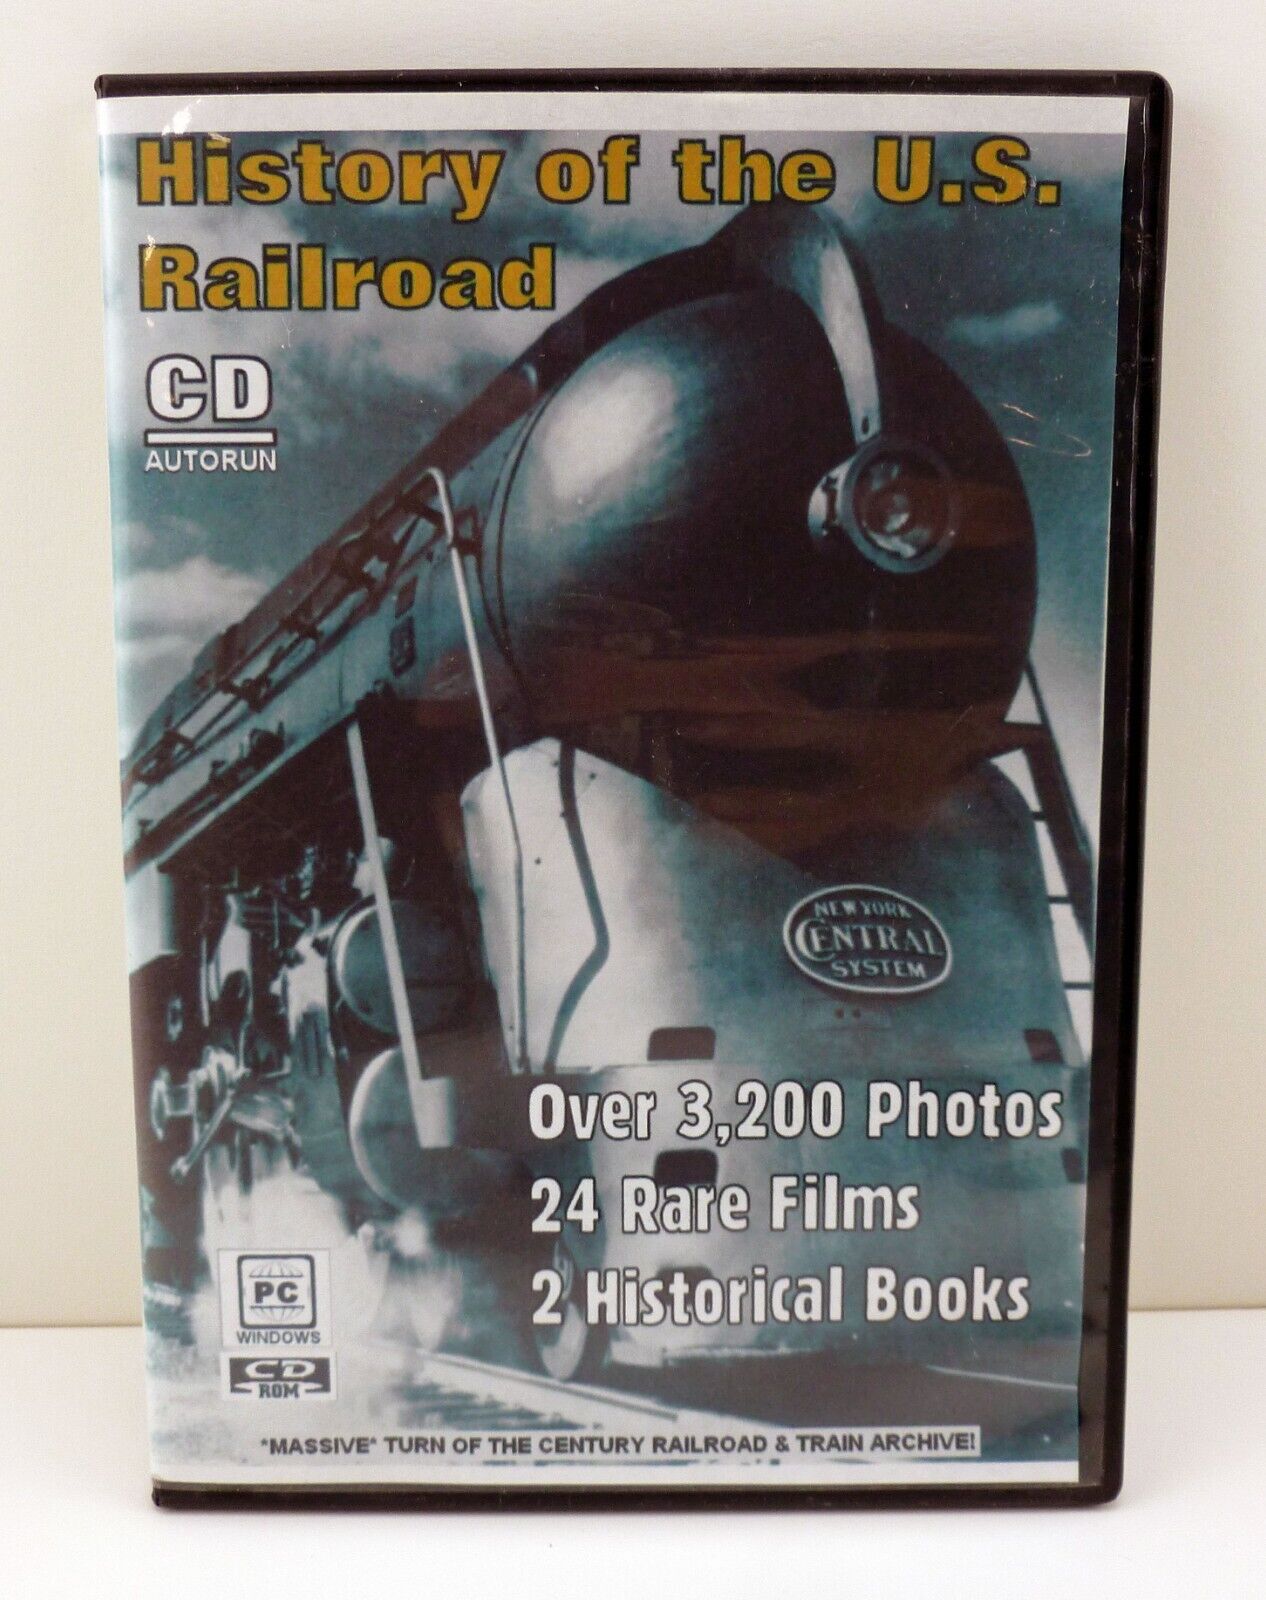 History of the U.S. Railroad CD